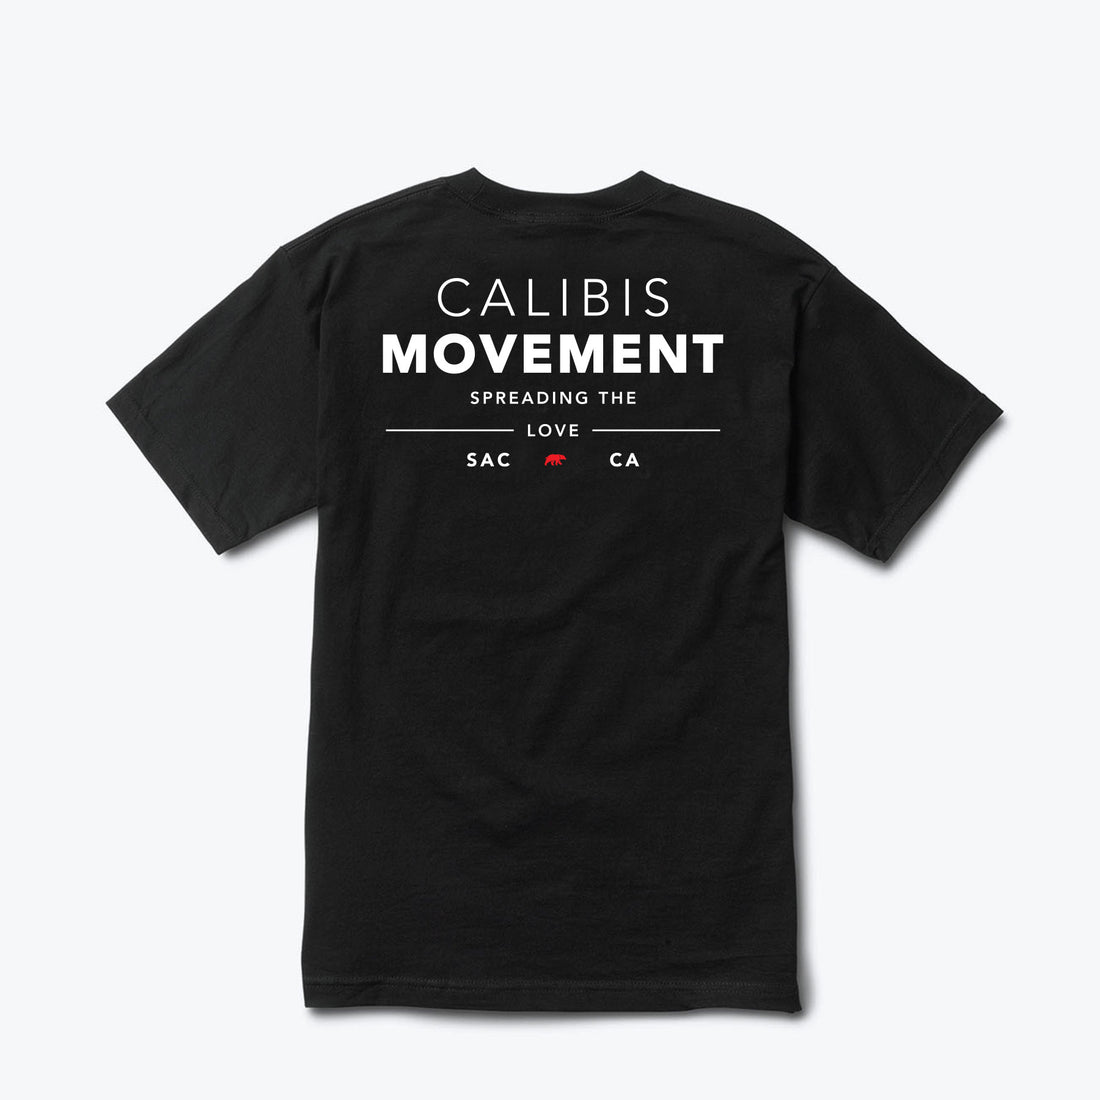 The Movement T-Shirt